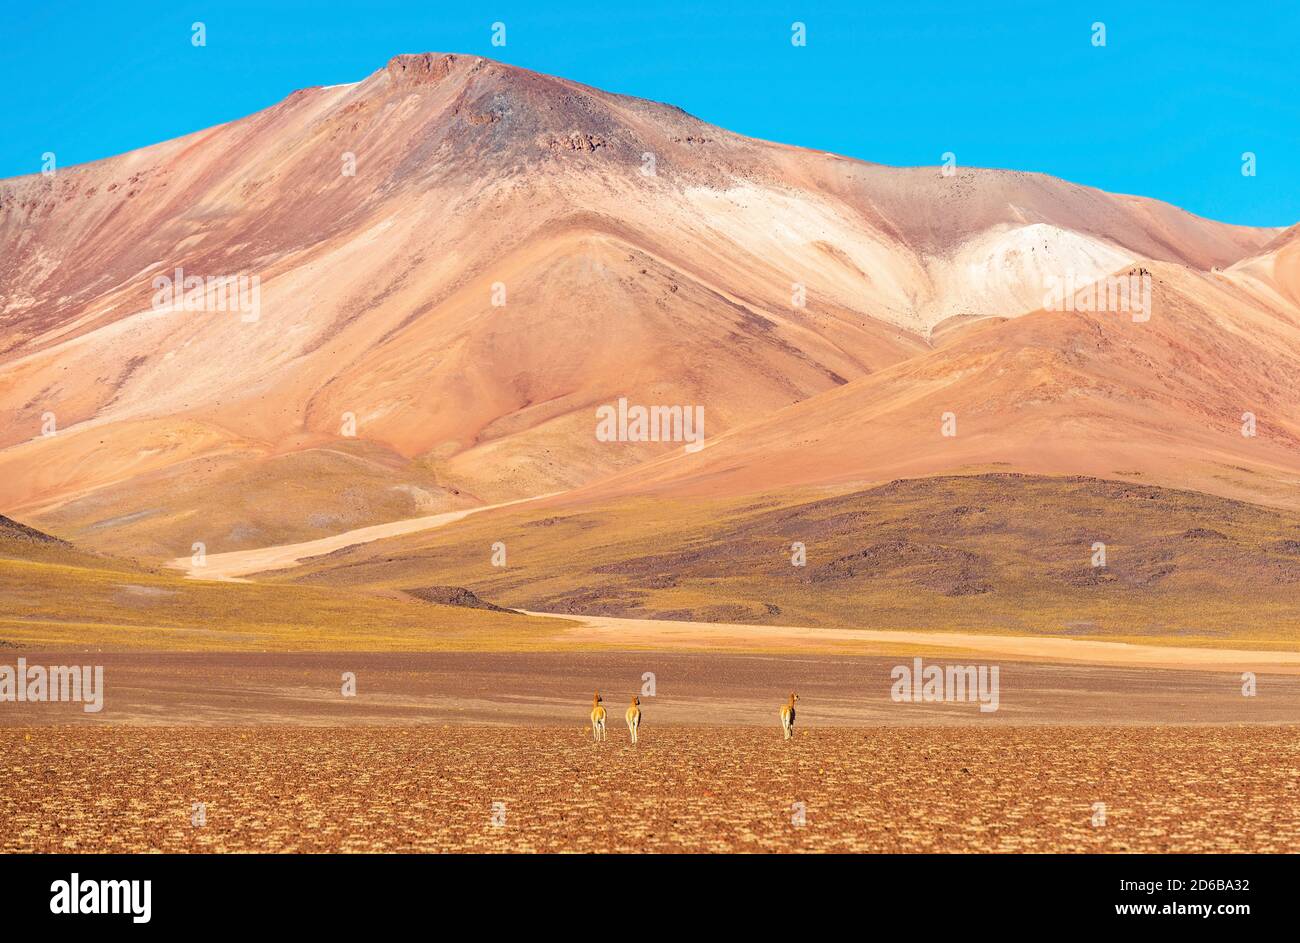 Three vicuna (Vicugna vicugna) looking for food in the arid Andes altiplano, Uyuni salt flat desert region, Bolivia. Stock Photo